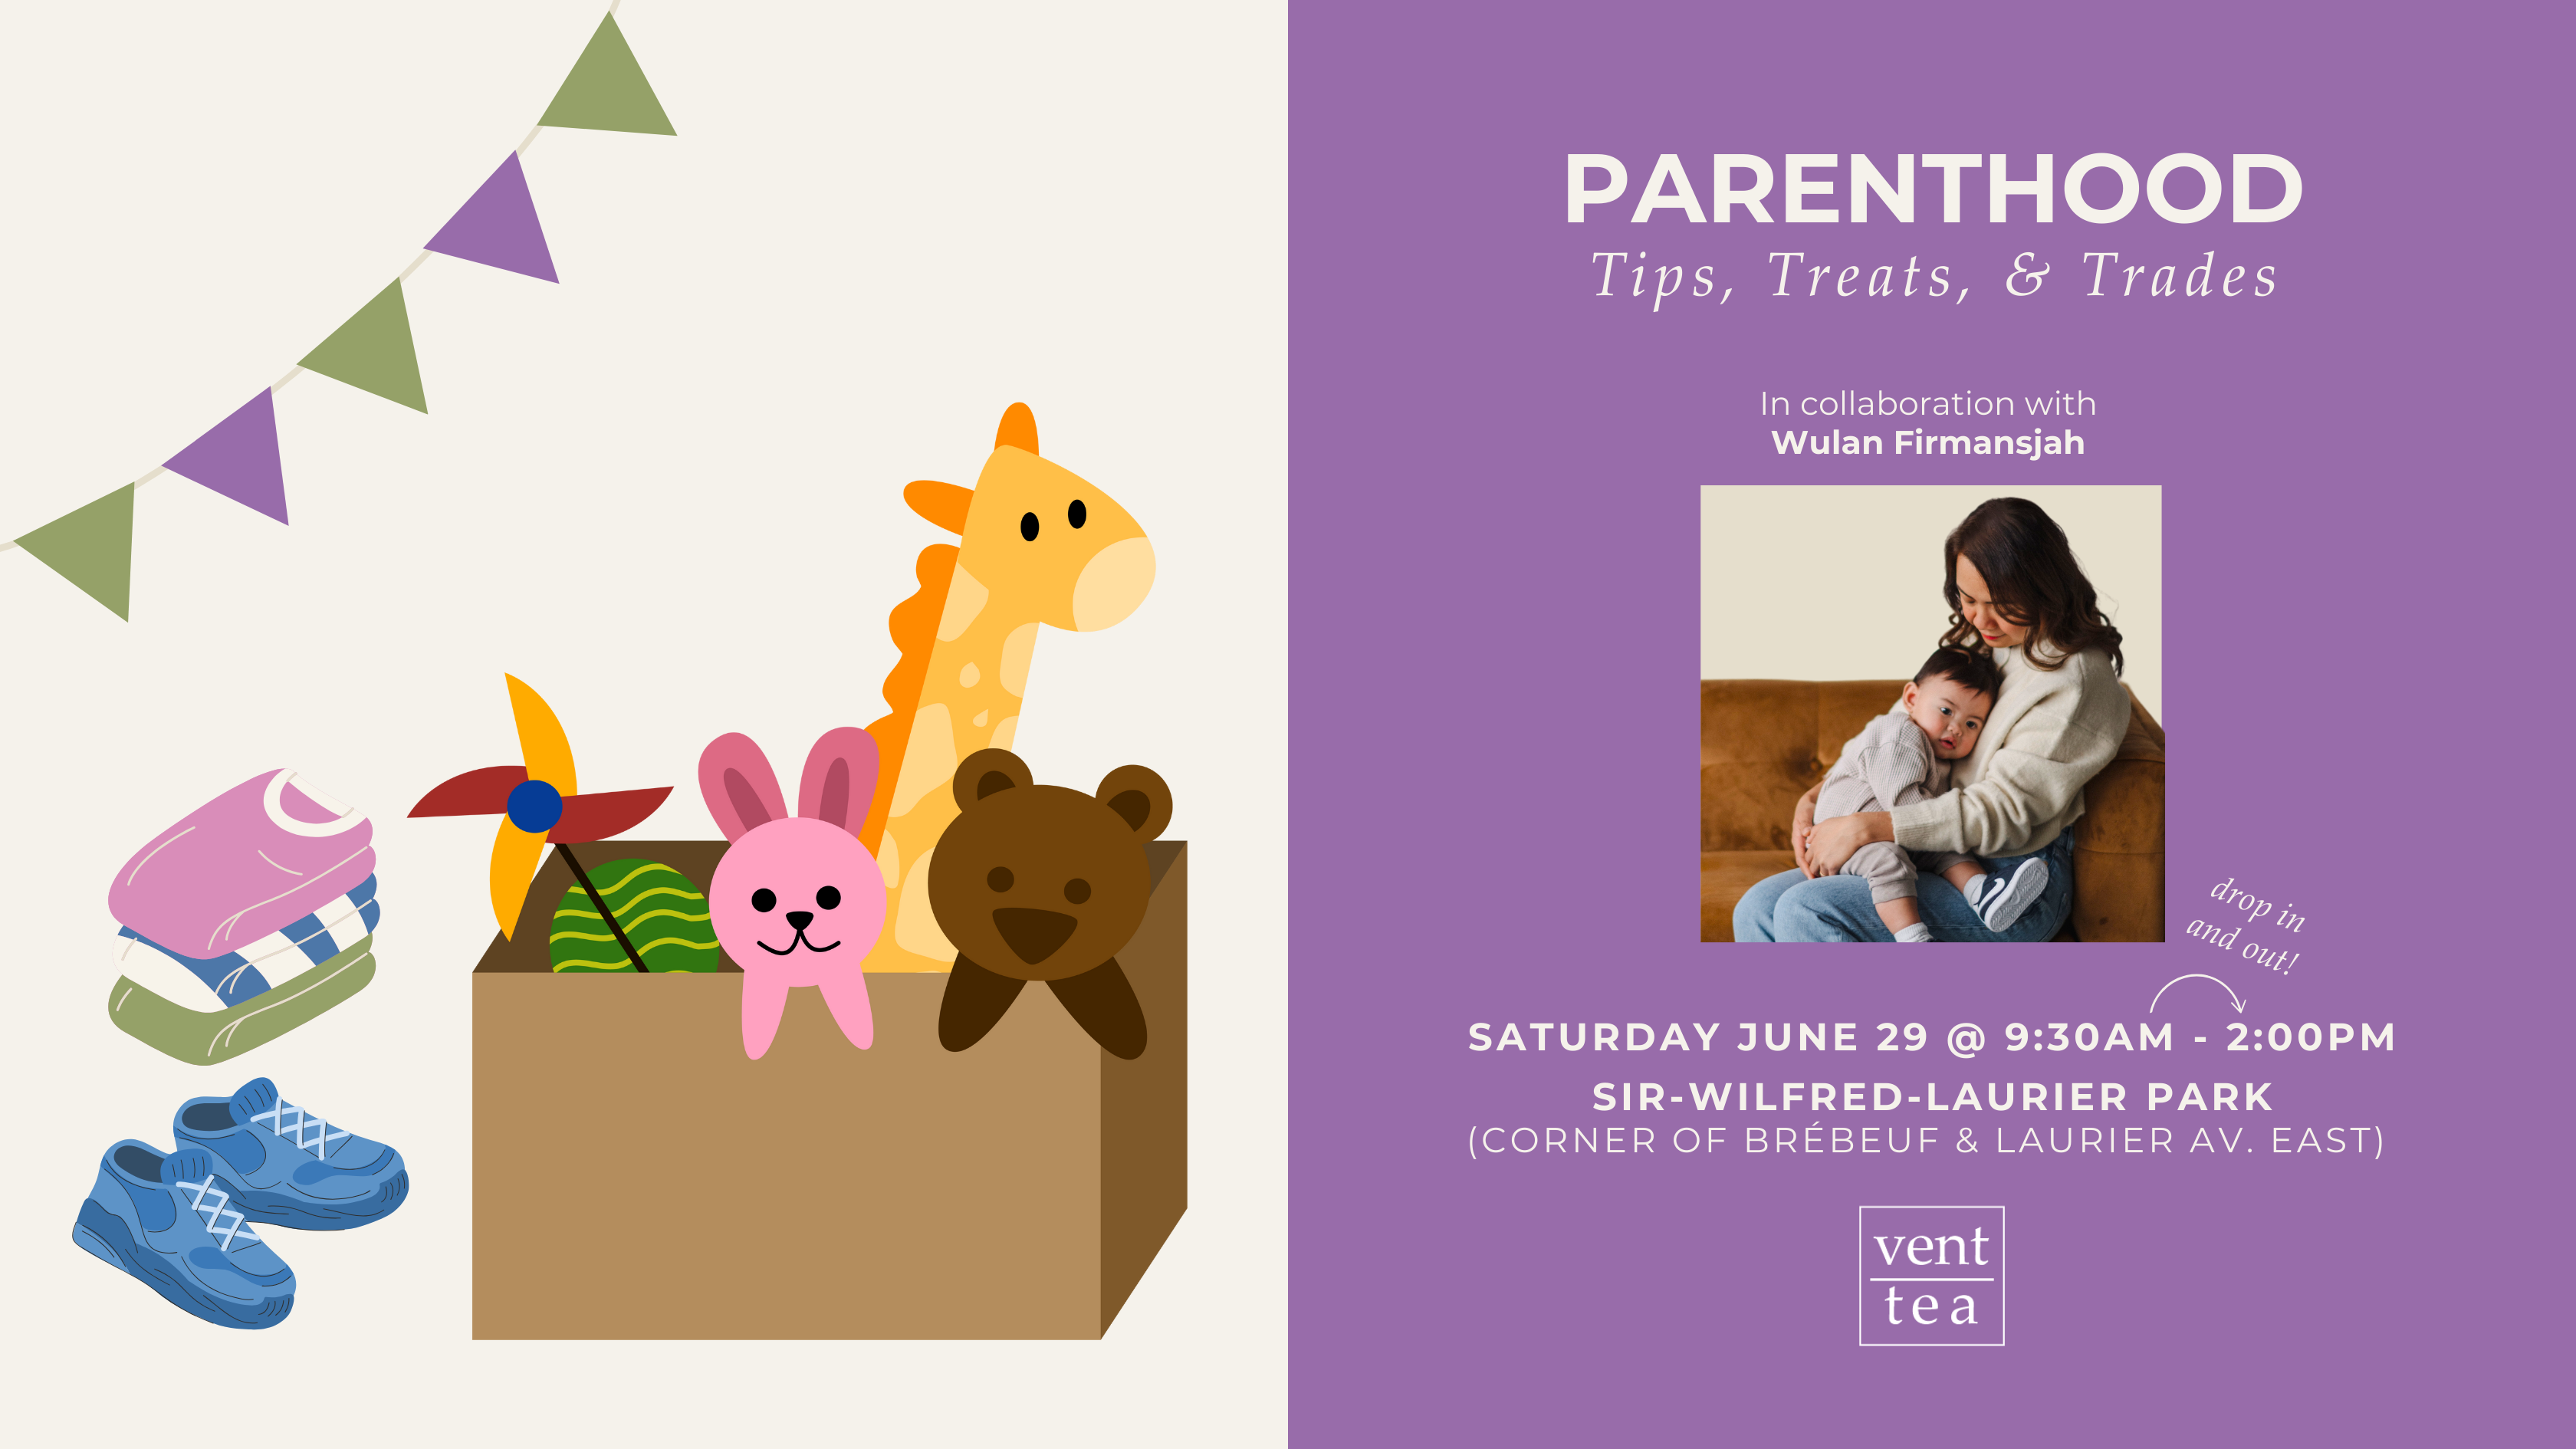 Parenthood: Tips, Treats, & Trades